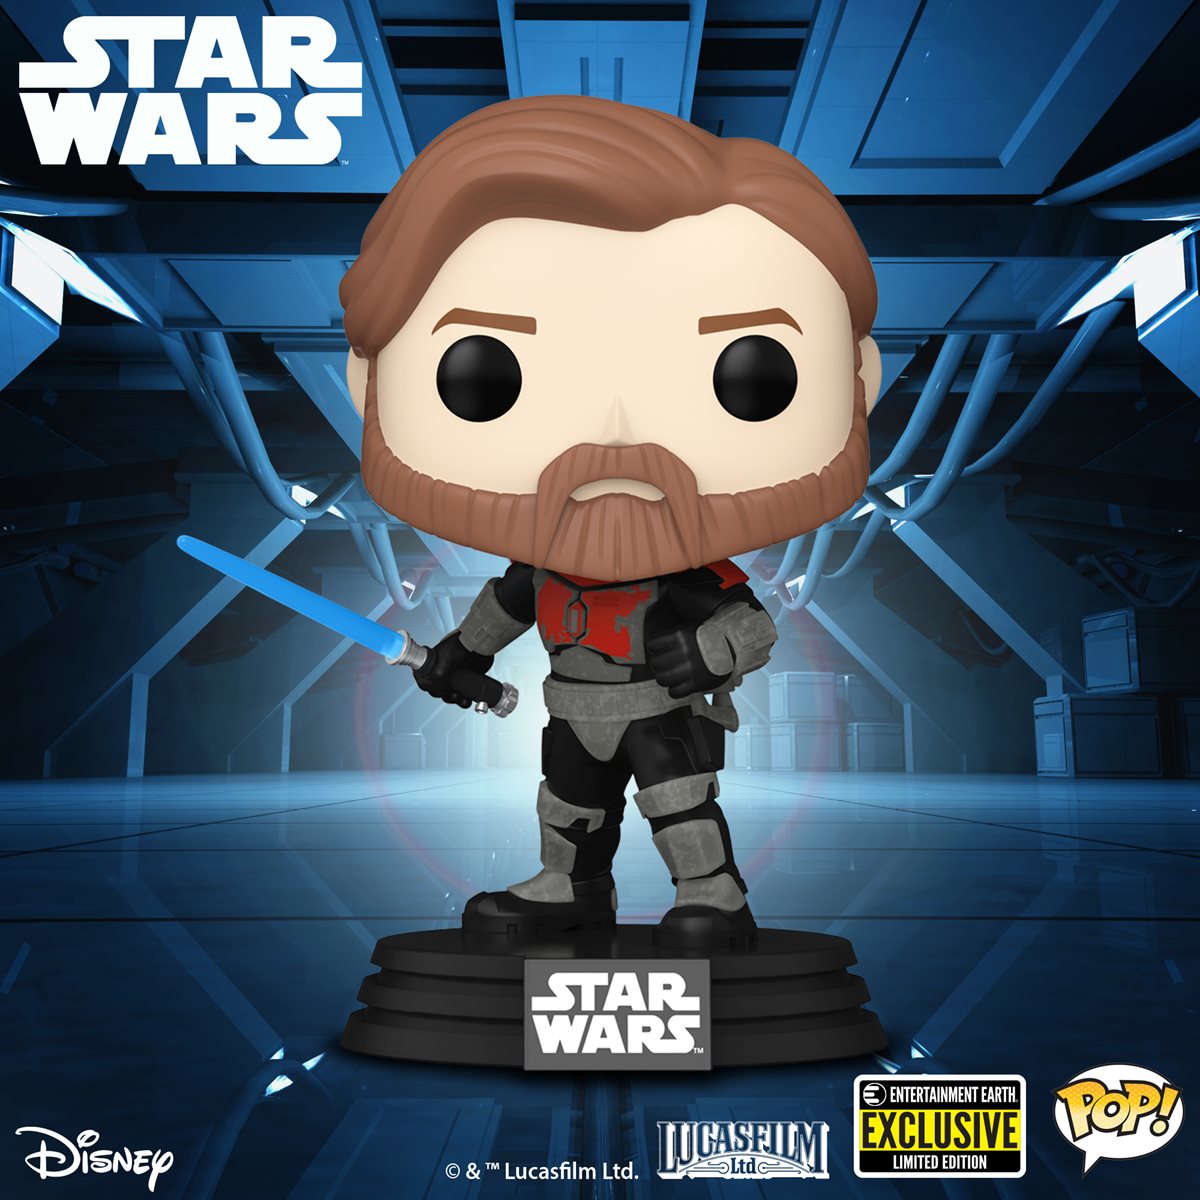 Star Wars: The Clone Wars Obi-Wan Kenobi Mandalorian Armor Pop! Vinyl Figure #599 - Entertainment Earth Exclusive